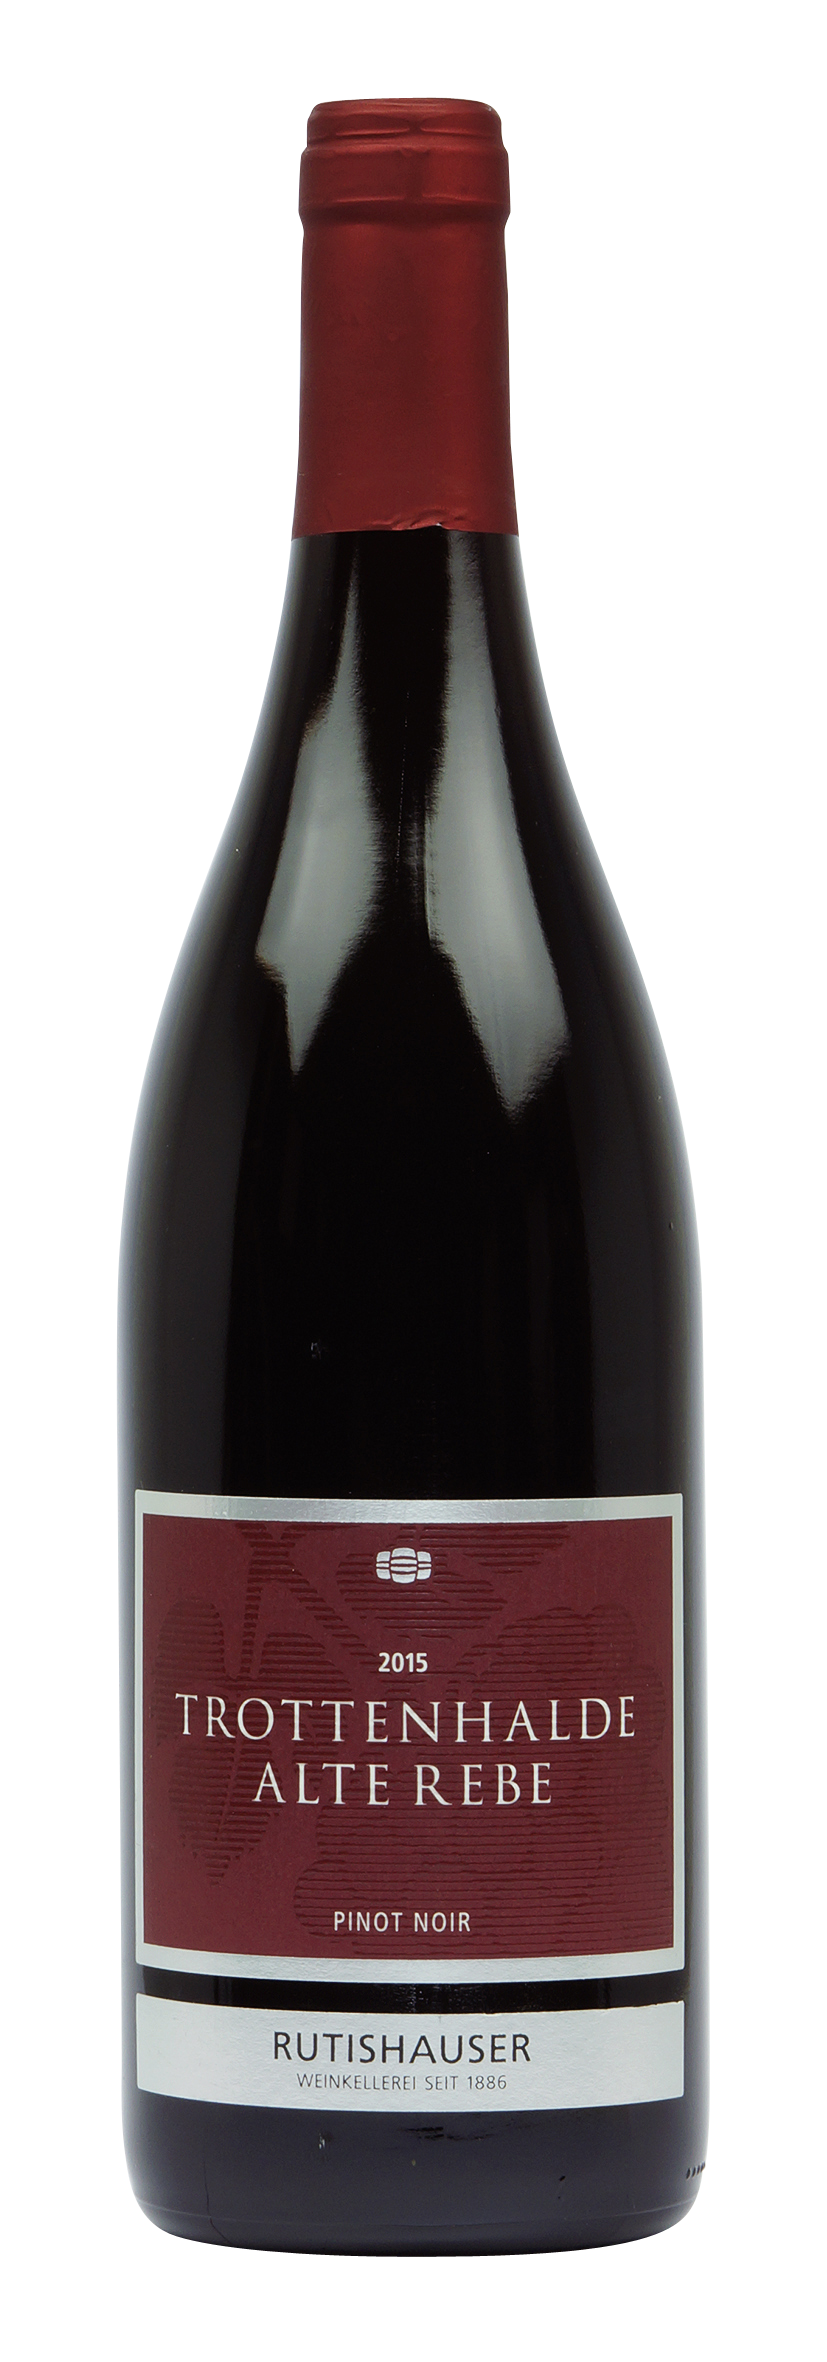 Thurgau AOC Trottenhalde Pinot Noir Alte Rebe 2015